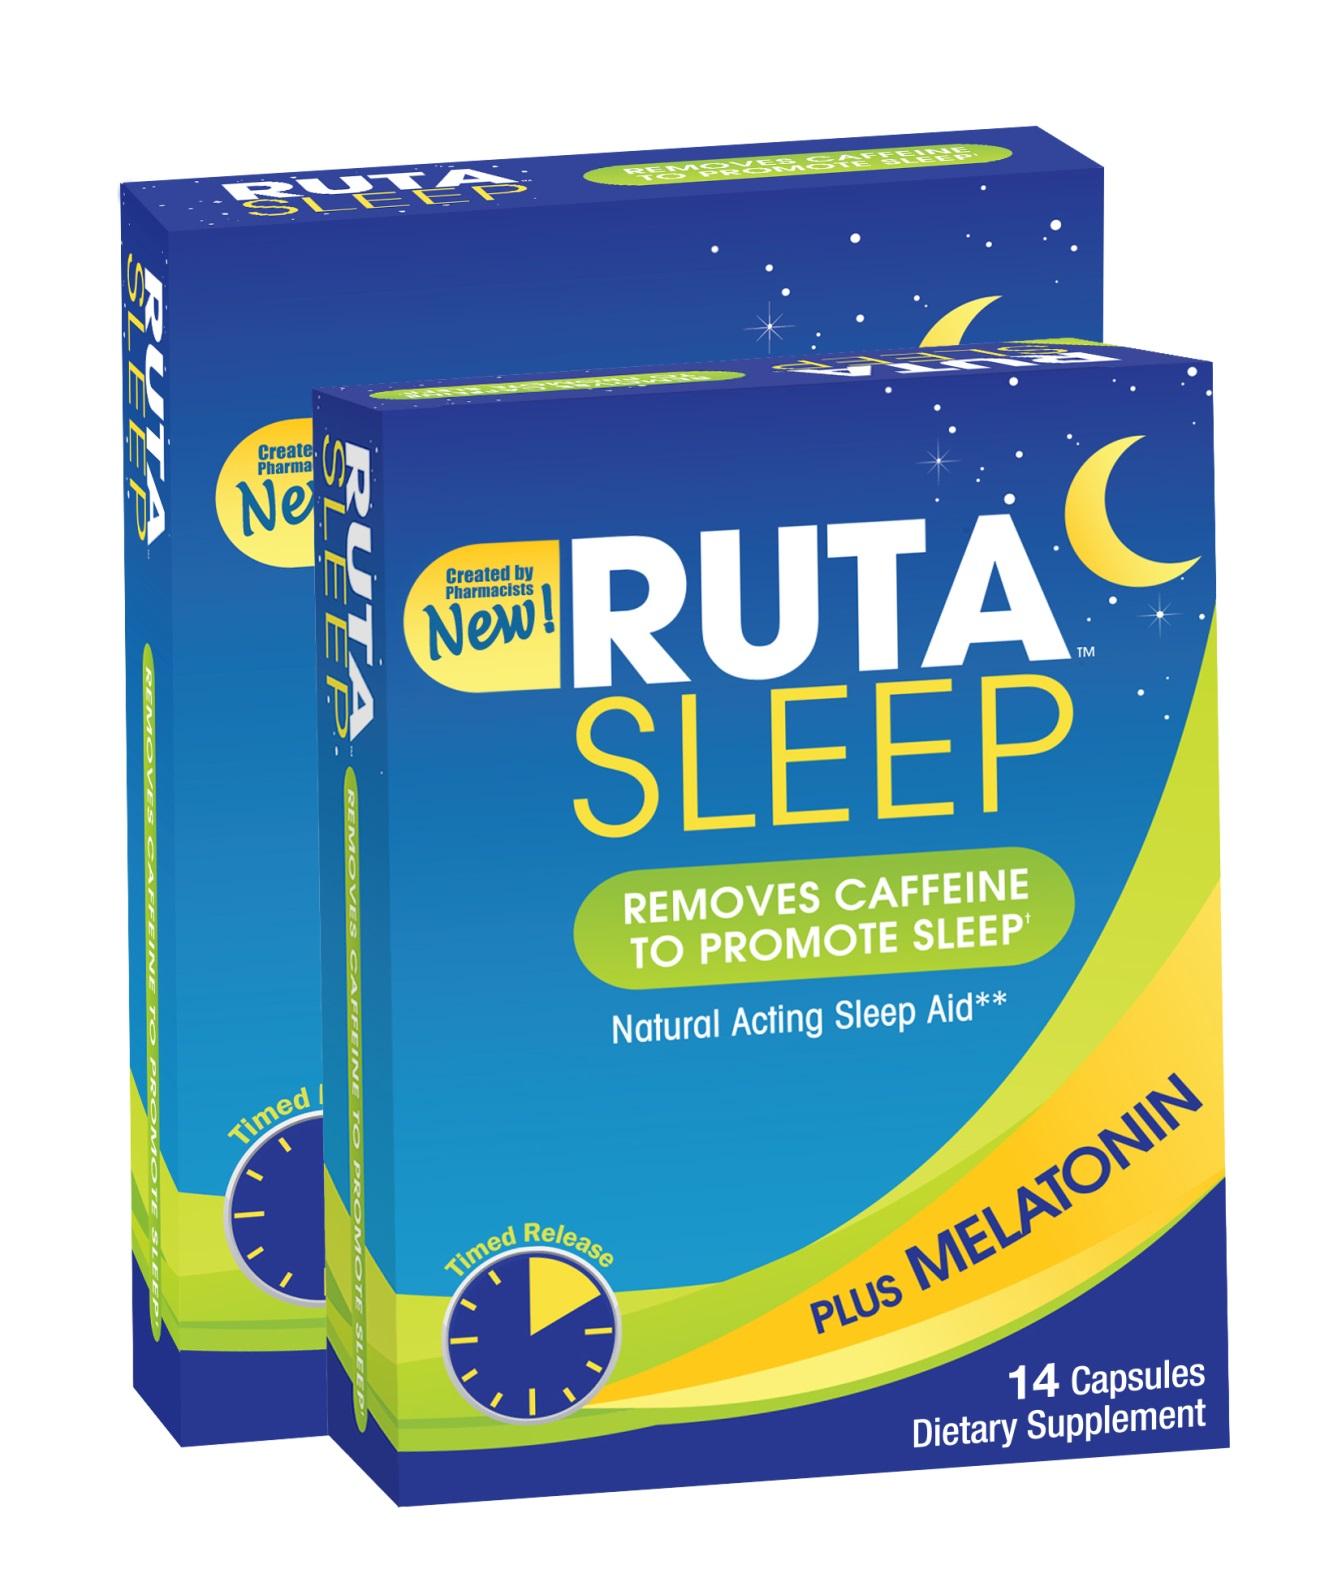 Natural Acting Sleep Aid